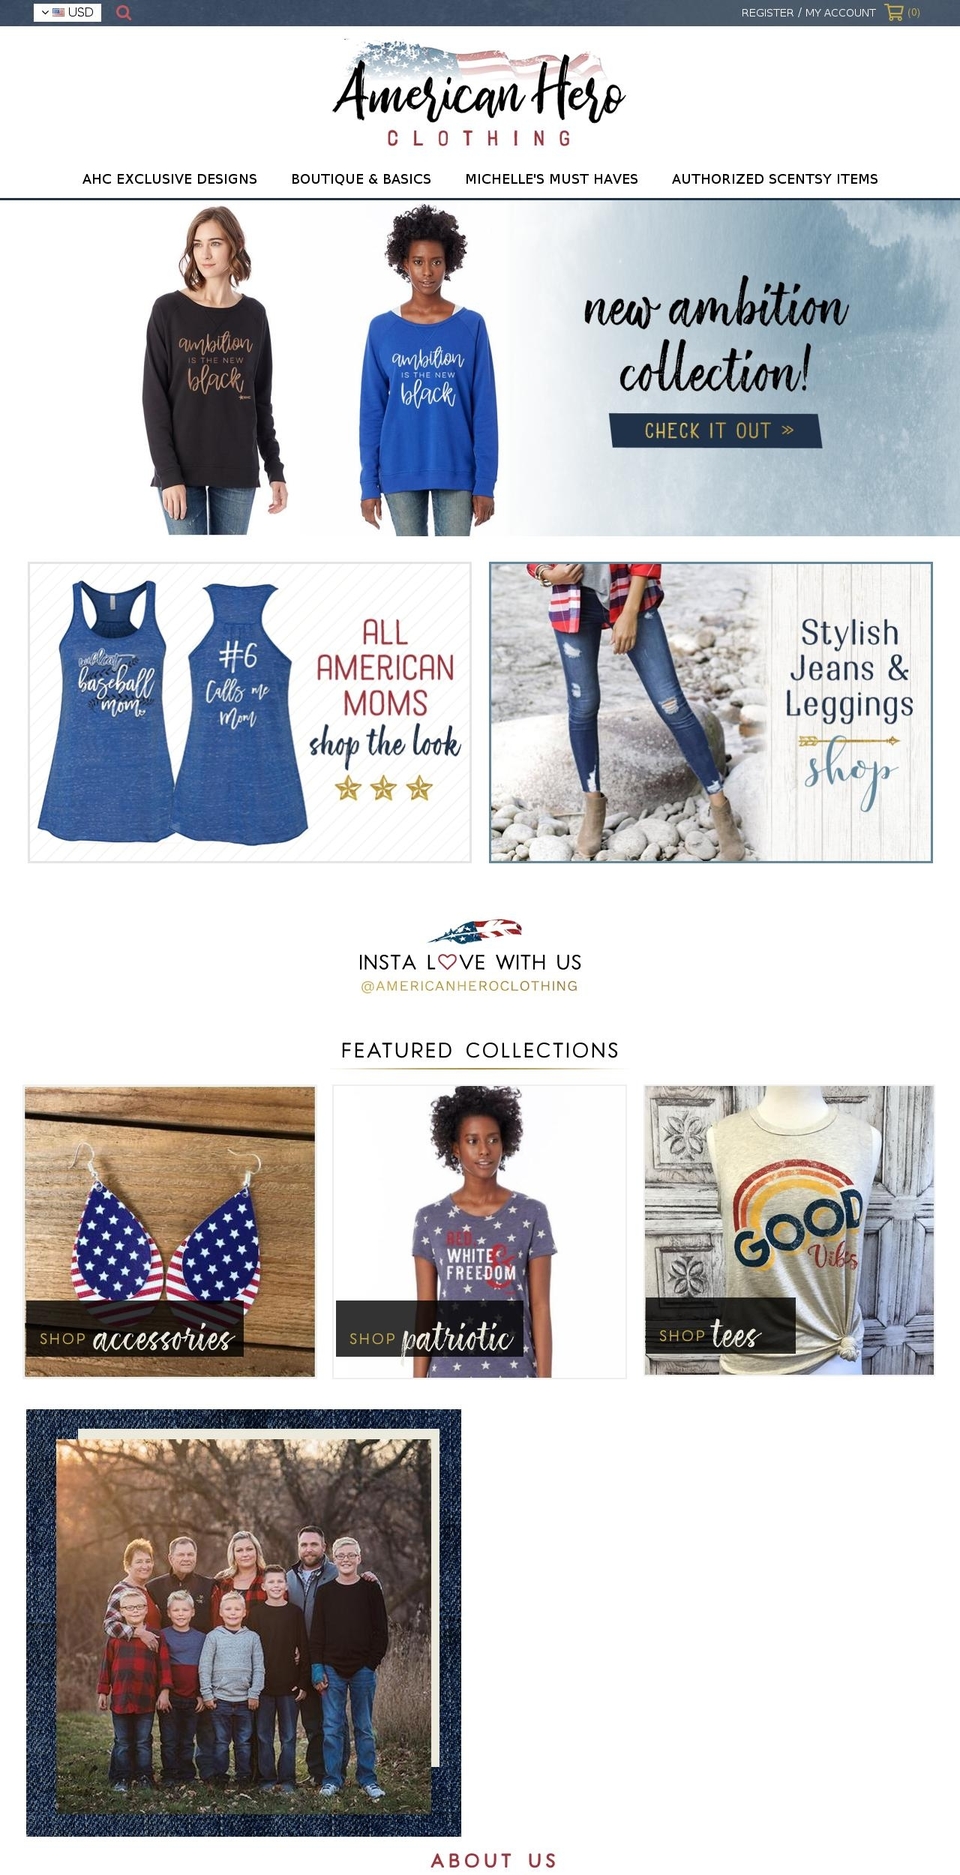 americanhero.clothing shopify website screenshot